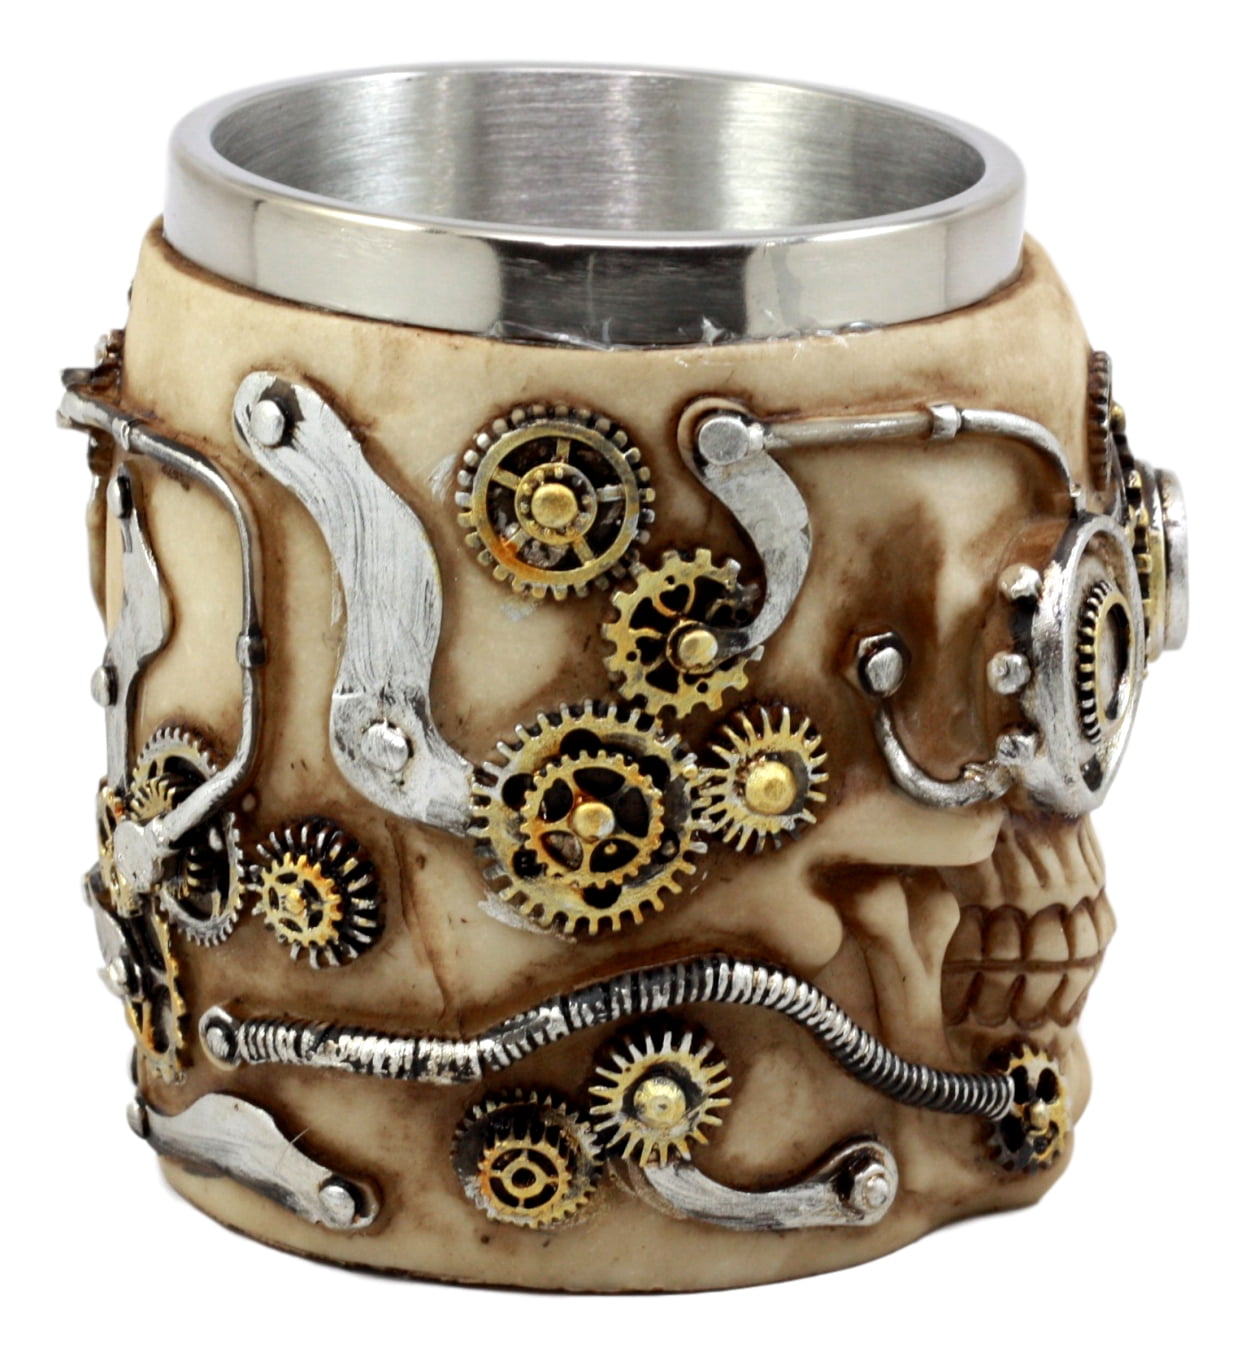 NUOBESTY Skull Beer Mugs Steampunk Beer Stein Tankard Mechanical Gear Pipeline Design Coffee Mug Bar Cup Halloween Gifts 